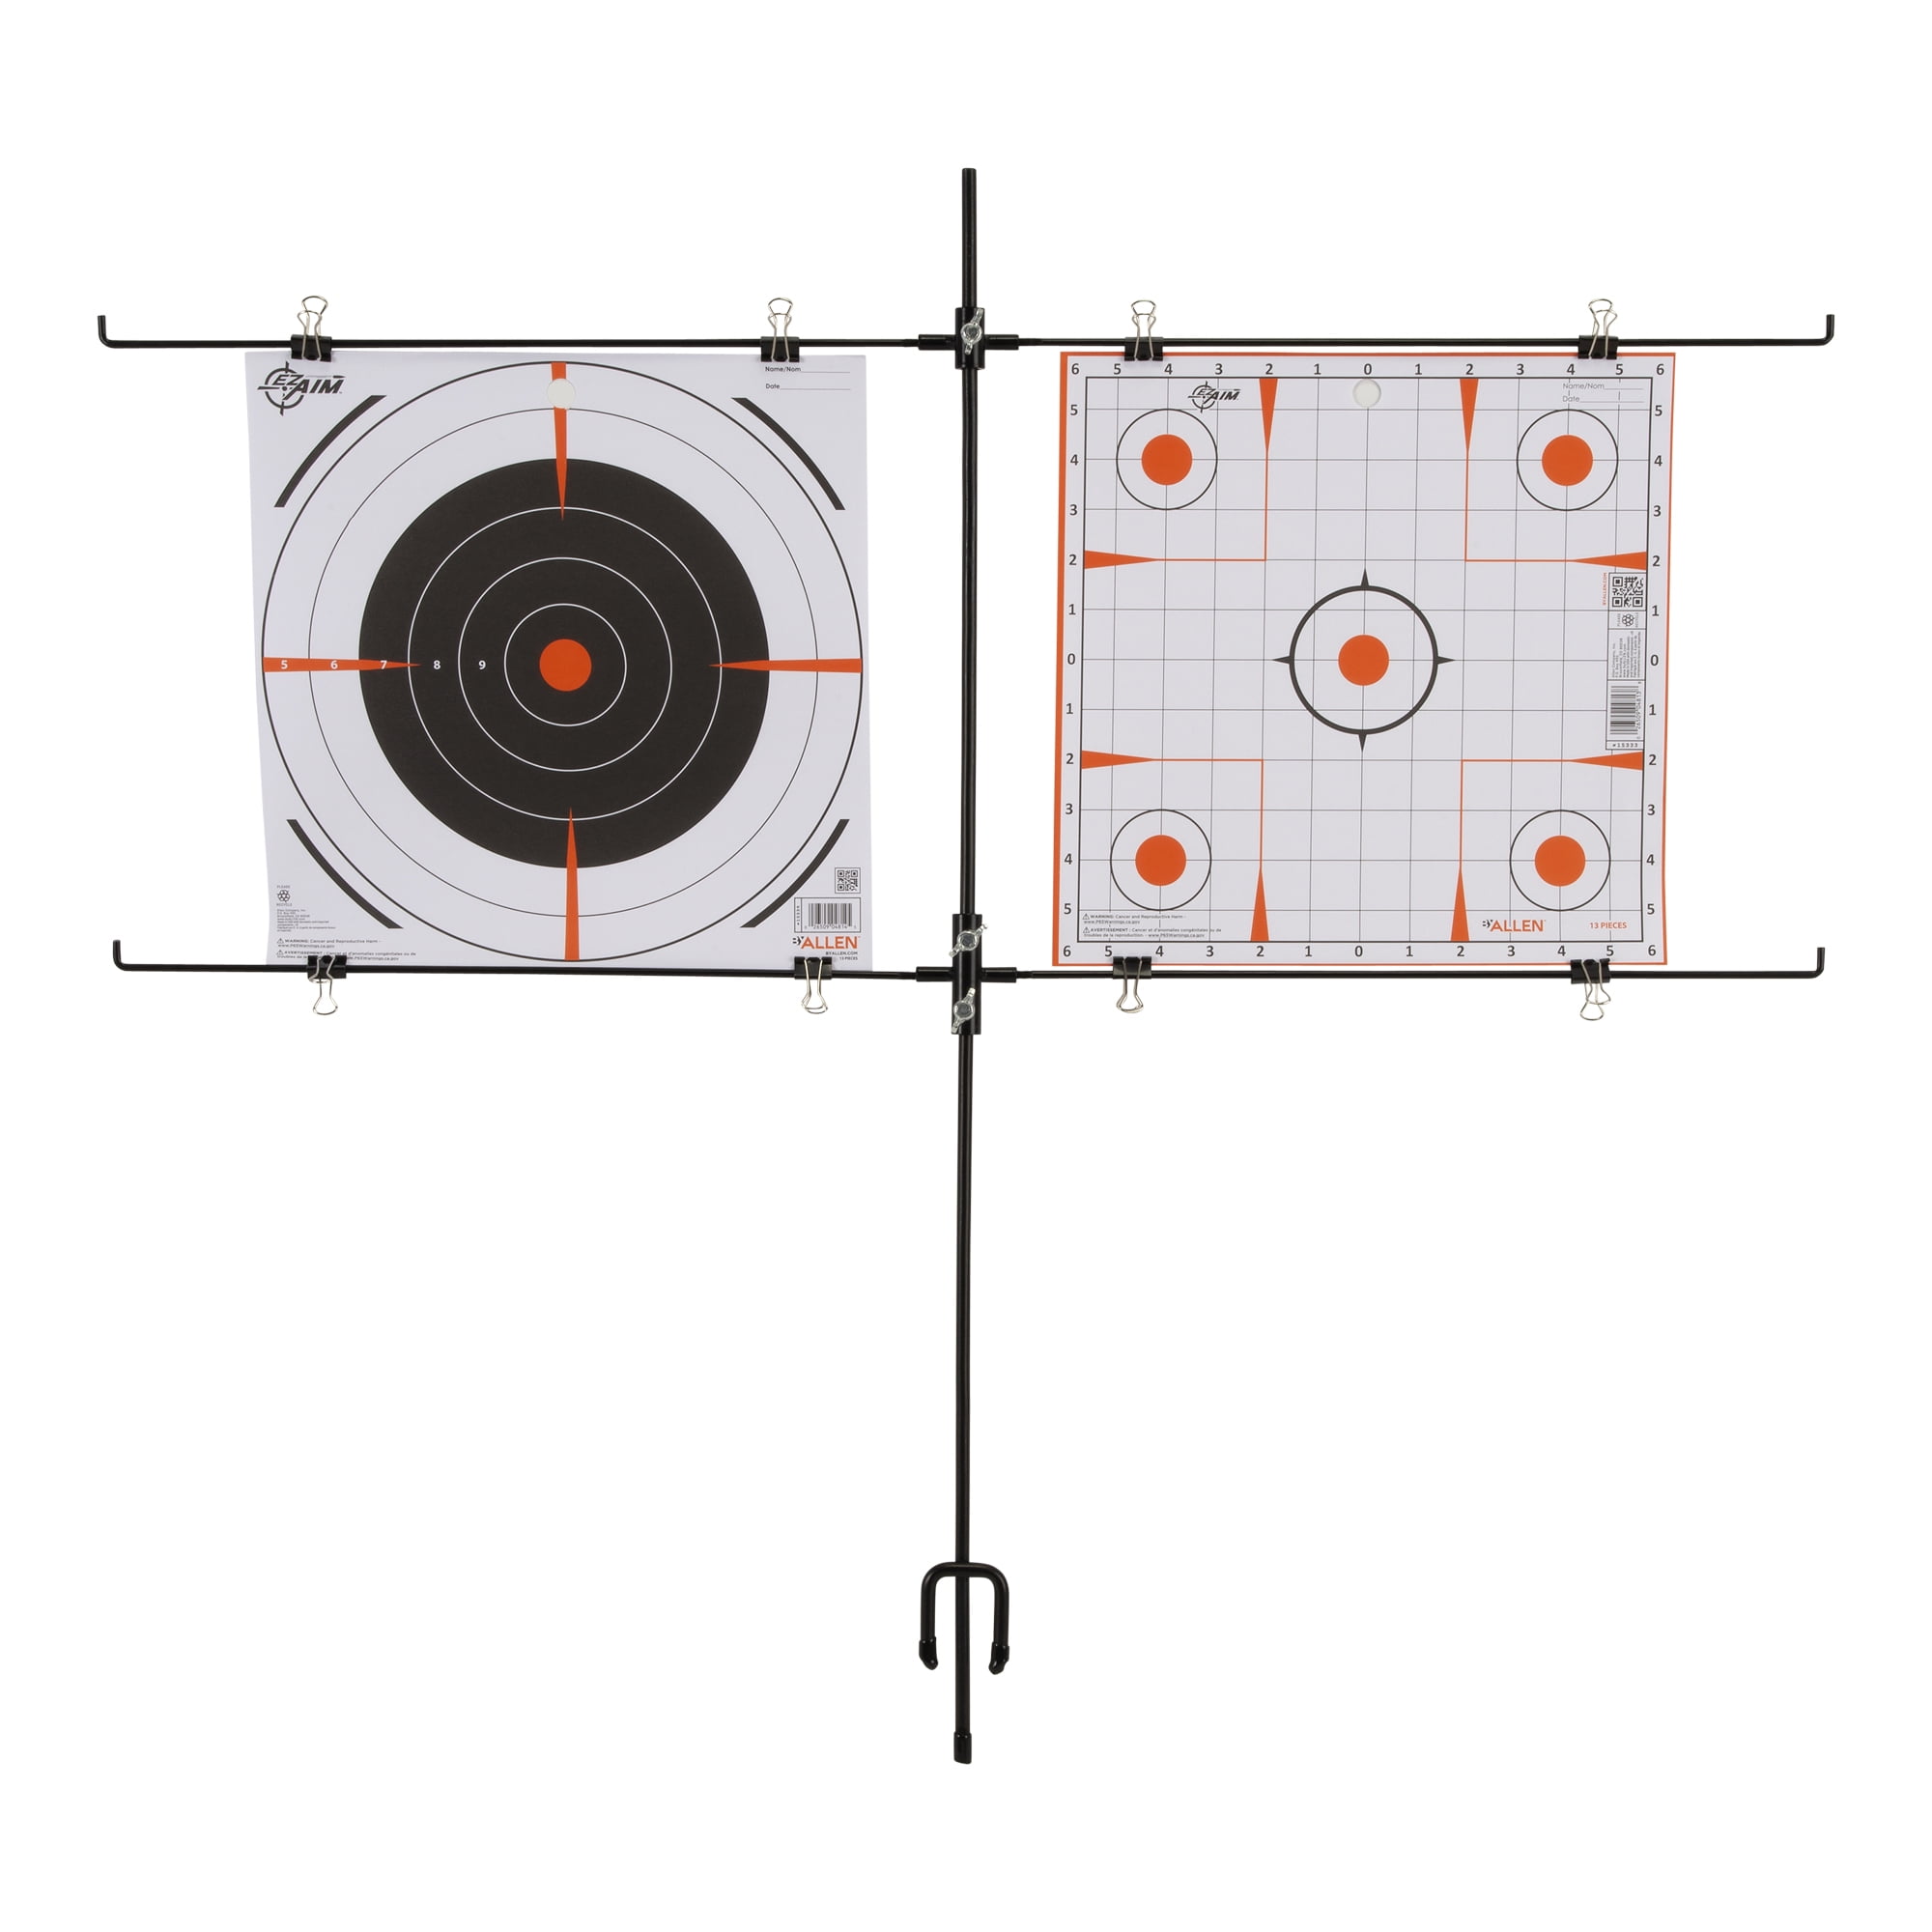 One AR500 Squirrel Target 9" x 10" x 1/2" Painted Black Shooting Practice Range 